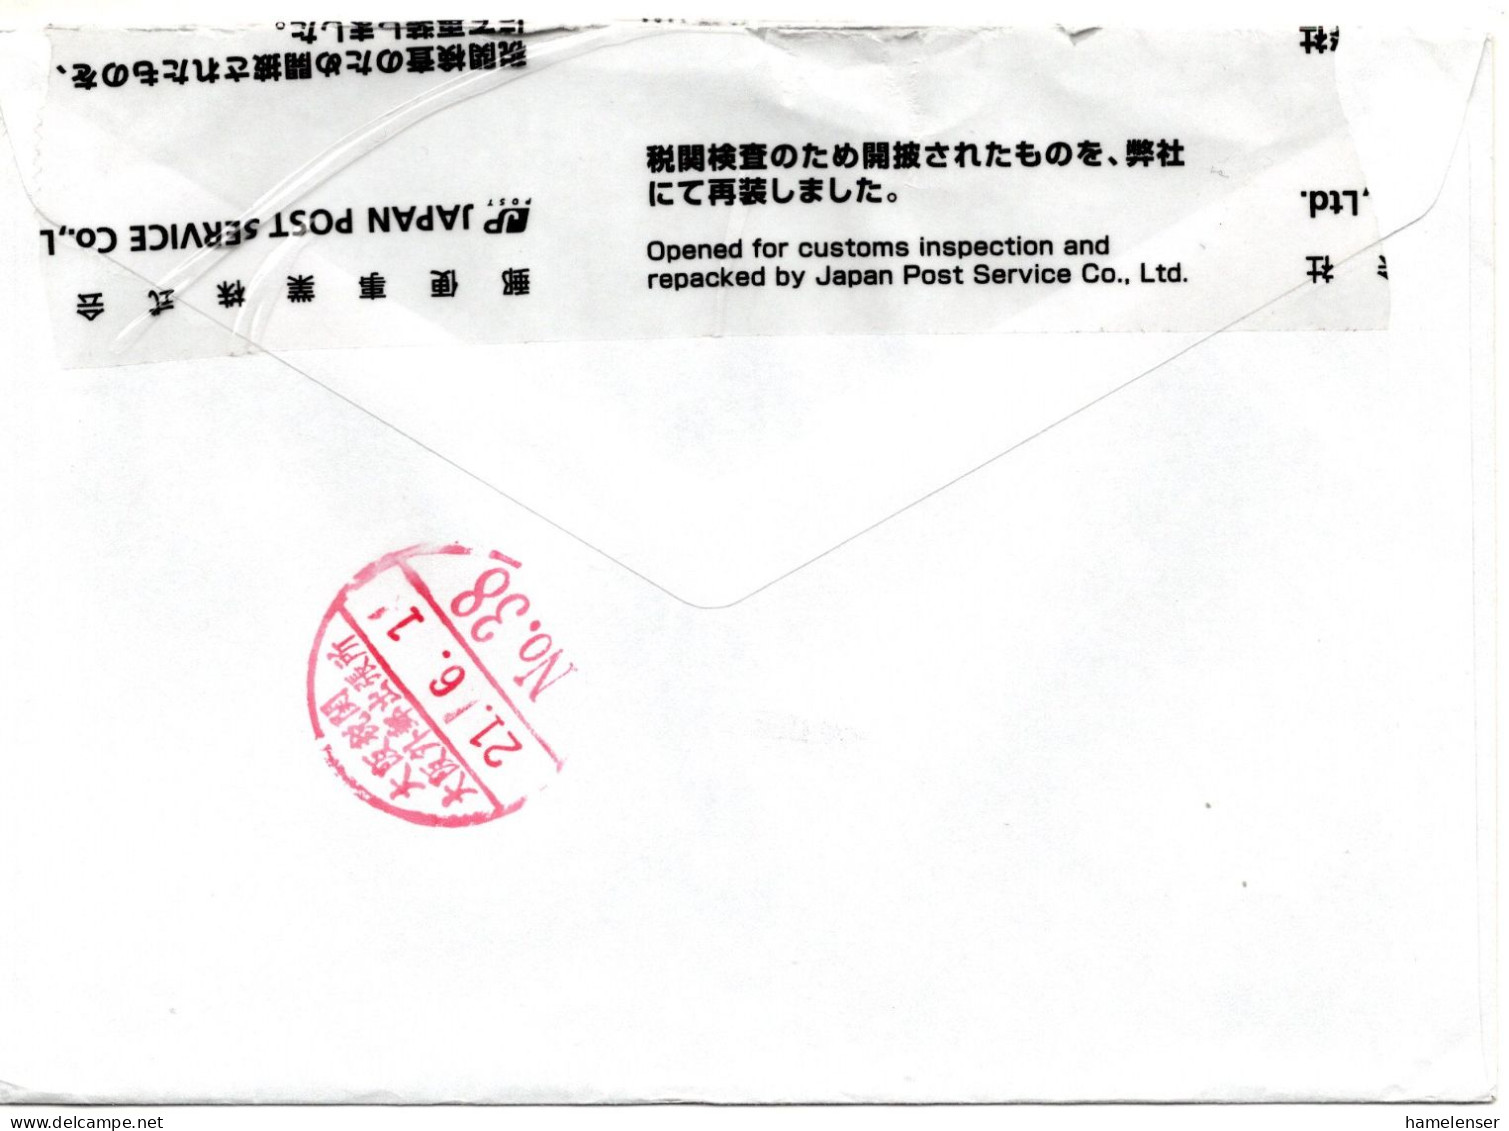 66006 - Niederlande - 2009 - MiF A LpBf Nach Japan, M Niederl Portokontrolle & Japan Zollkontrolle V Zollamt Osaka - Lettres & Documents